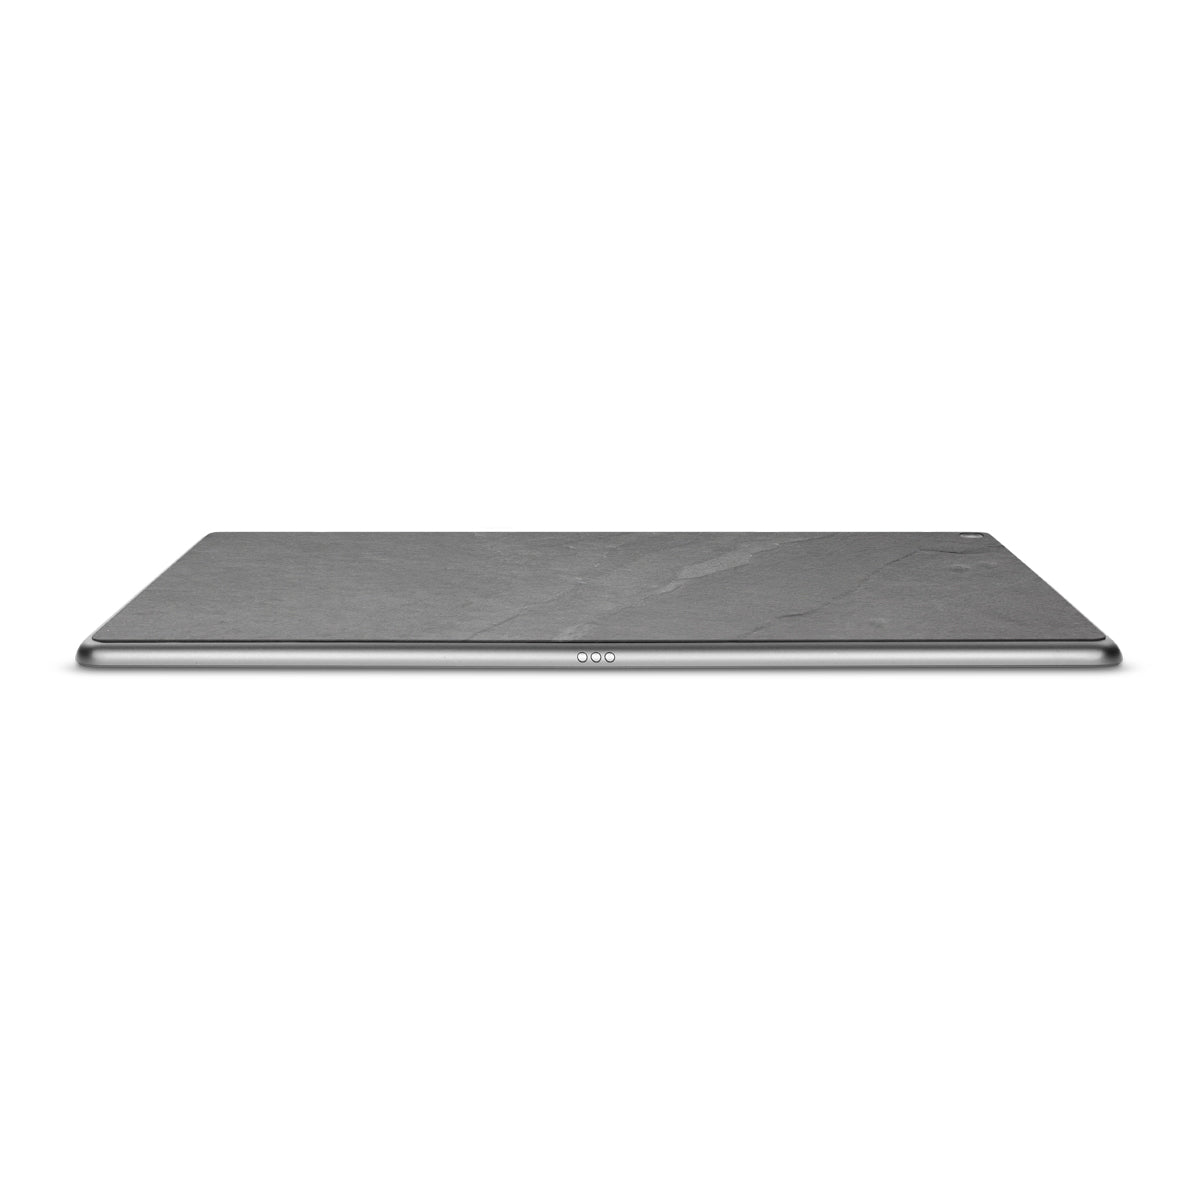 iPad Pro 12.9-inch (1st Gen)  —  Stone Skin